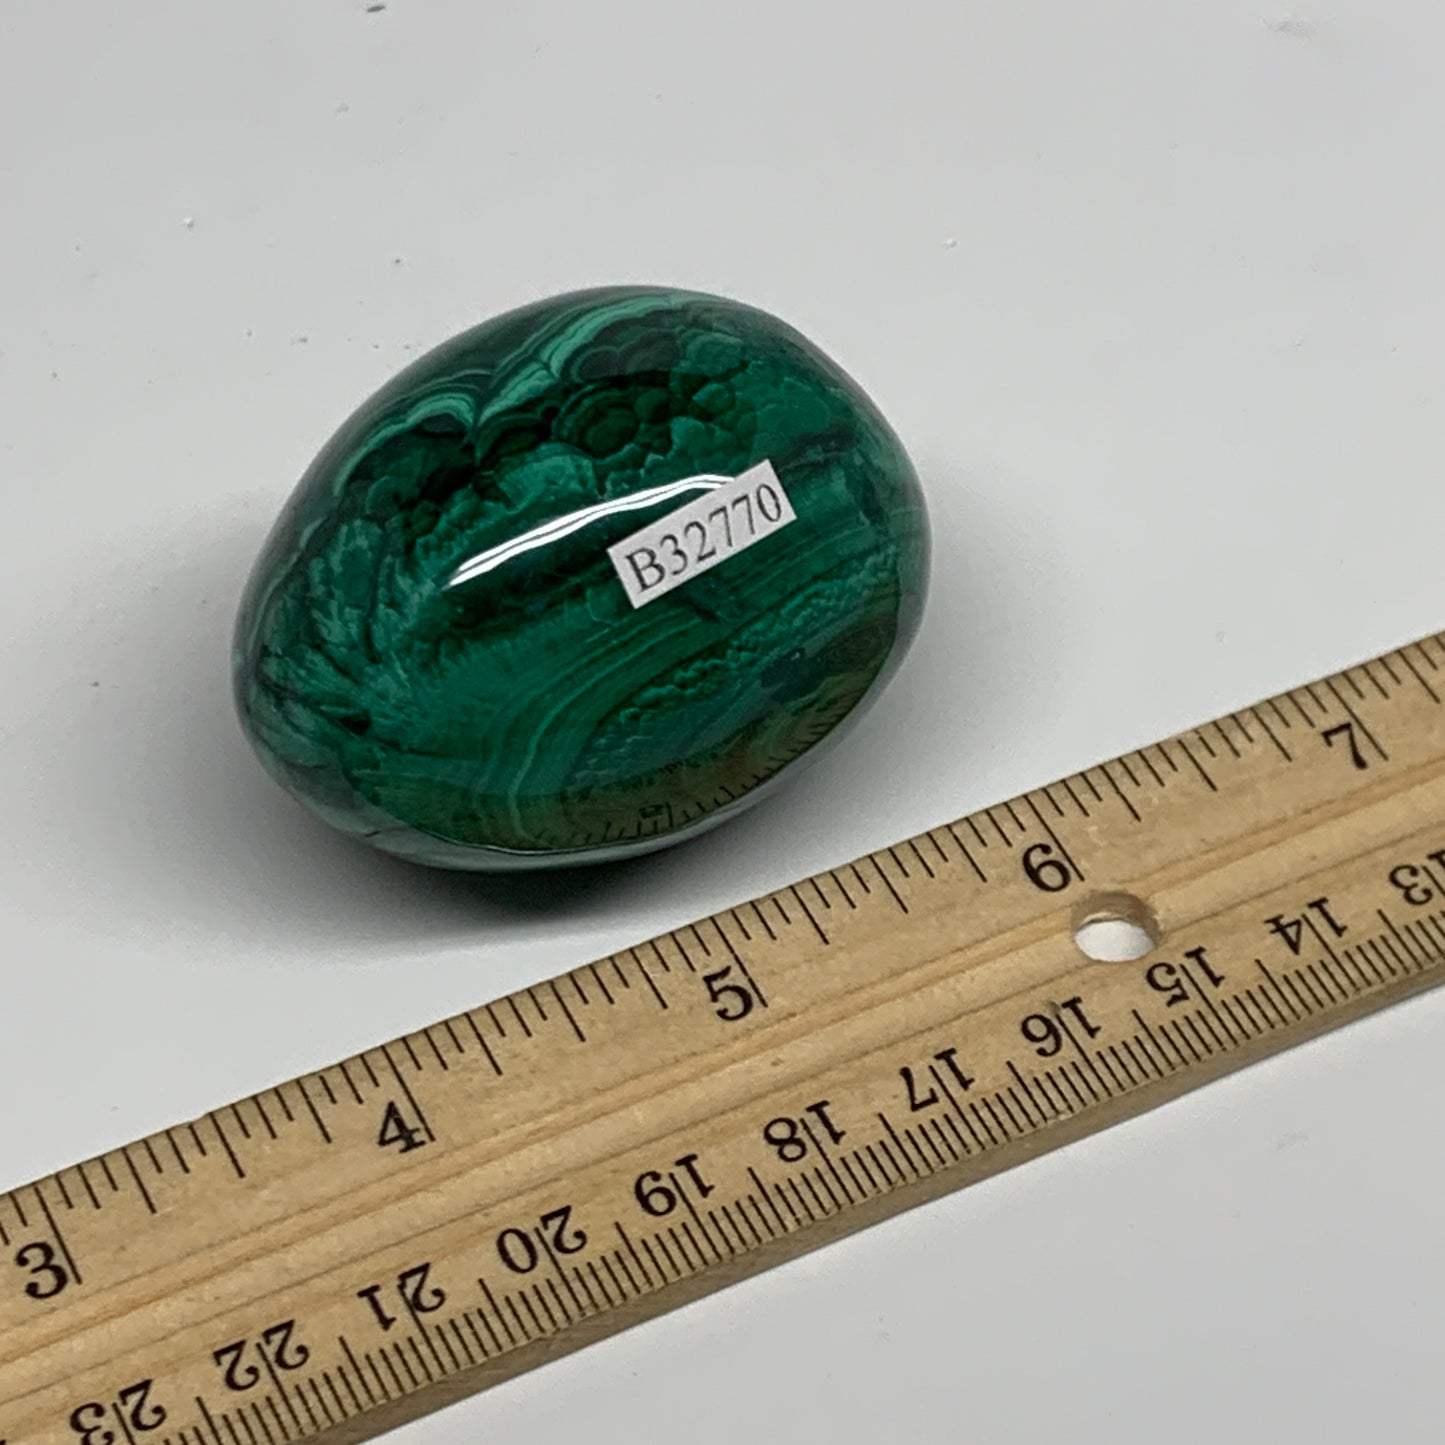 158g, 2"x1.6", Natural Solid Malachite Egg Polished Gemstone @Congo, B32770